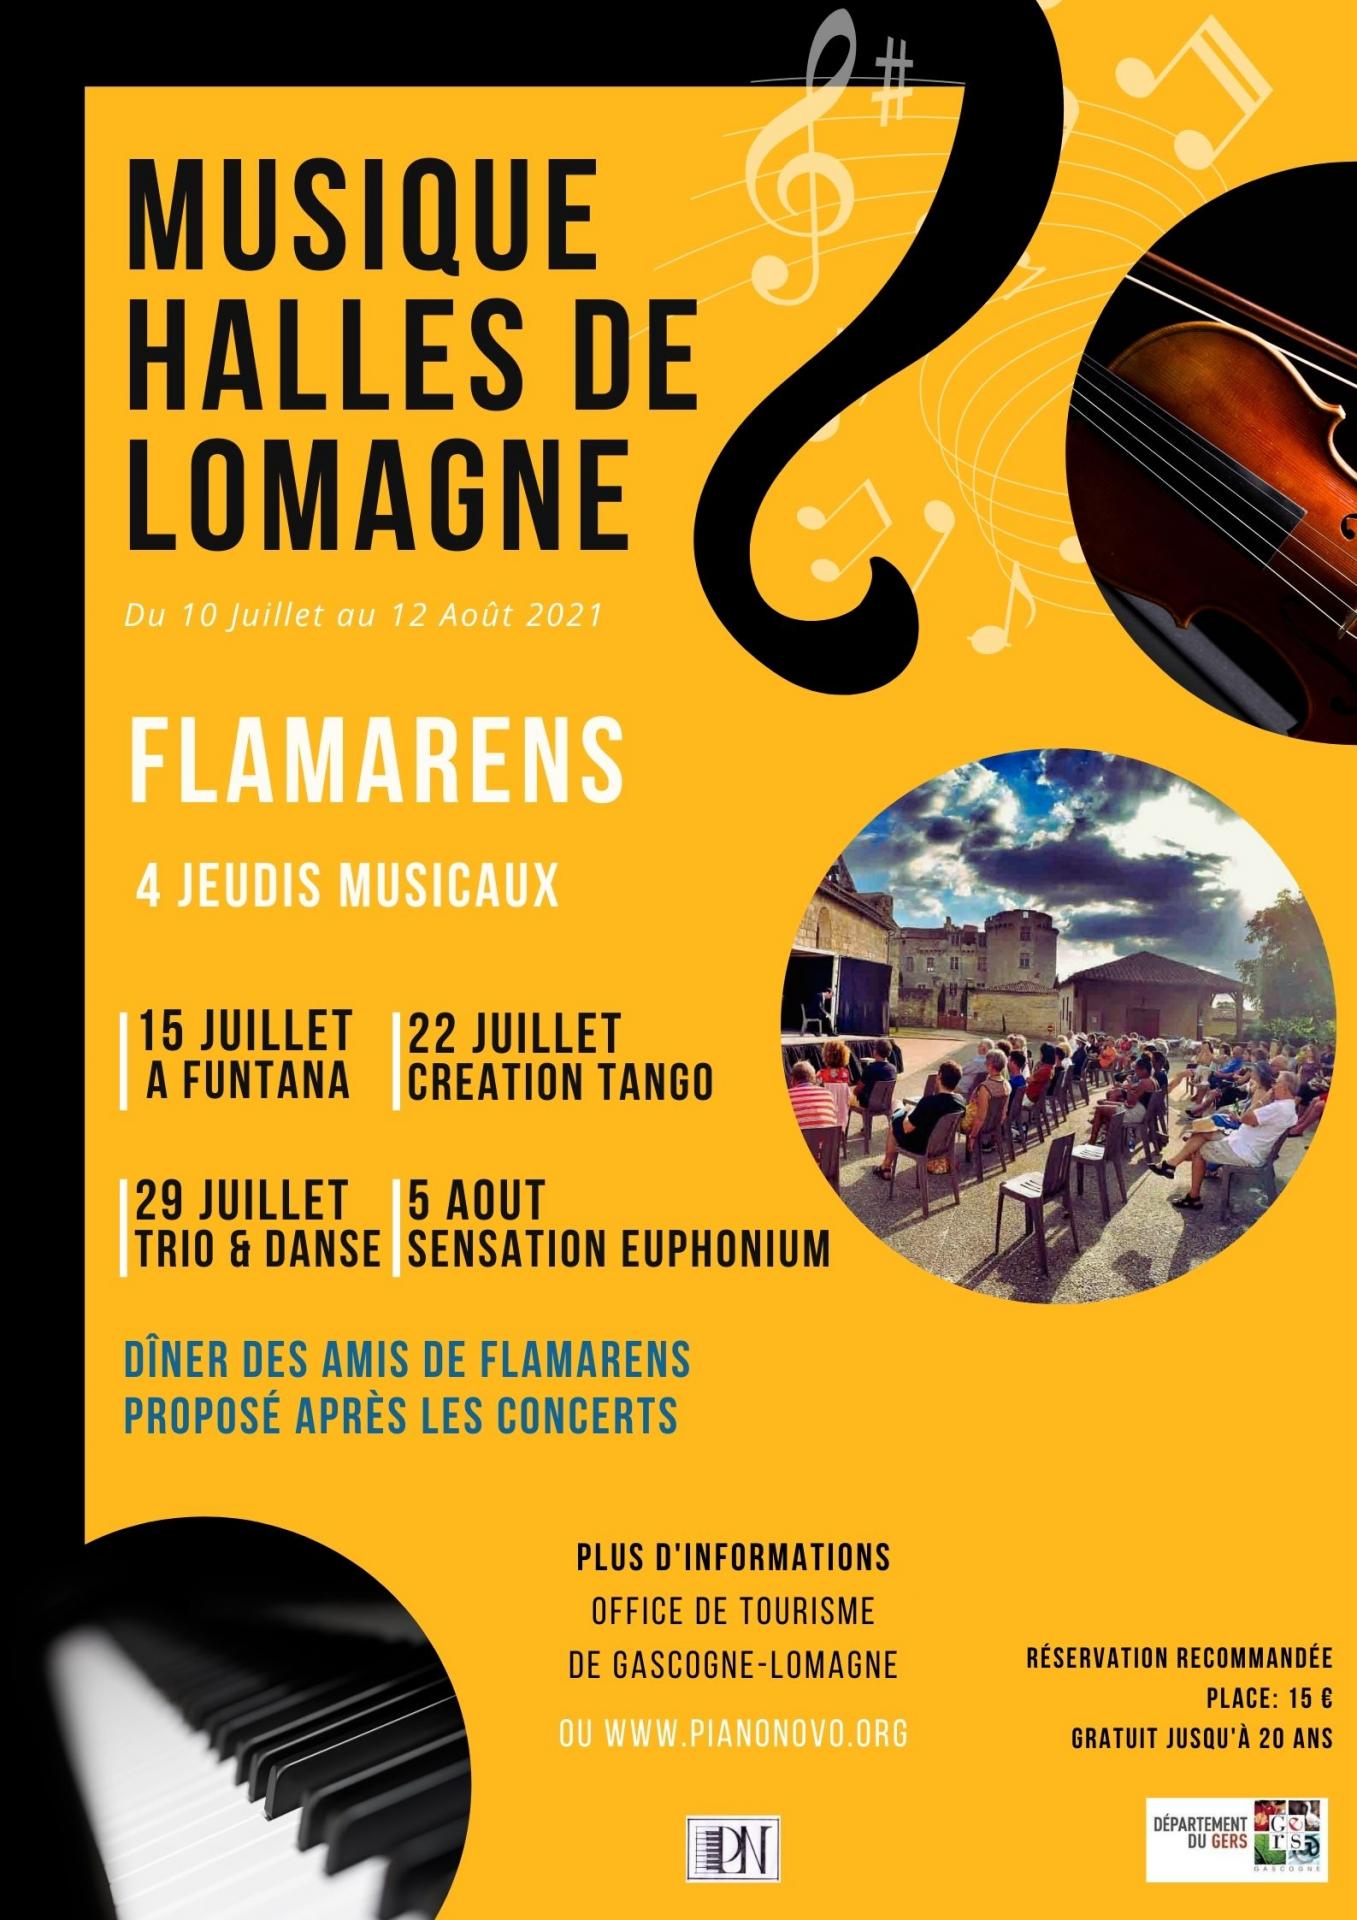 Flamarens musique halles 2021 light